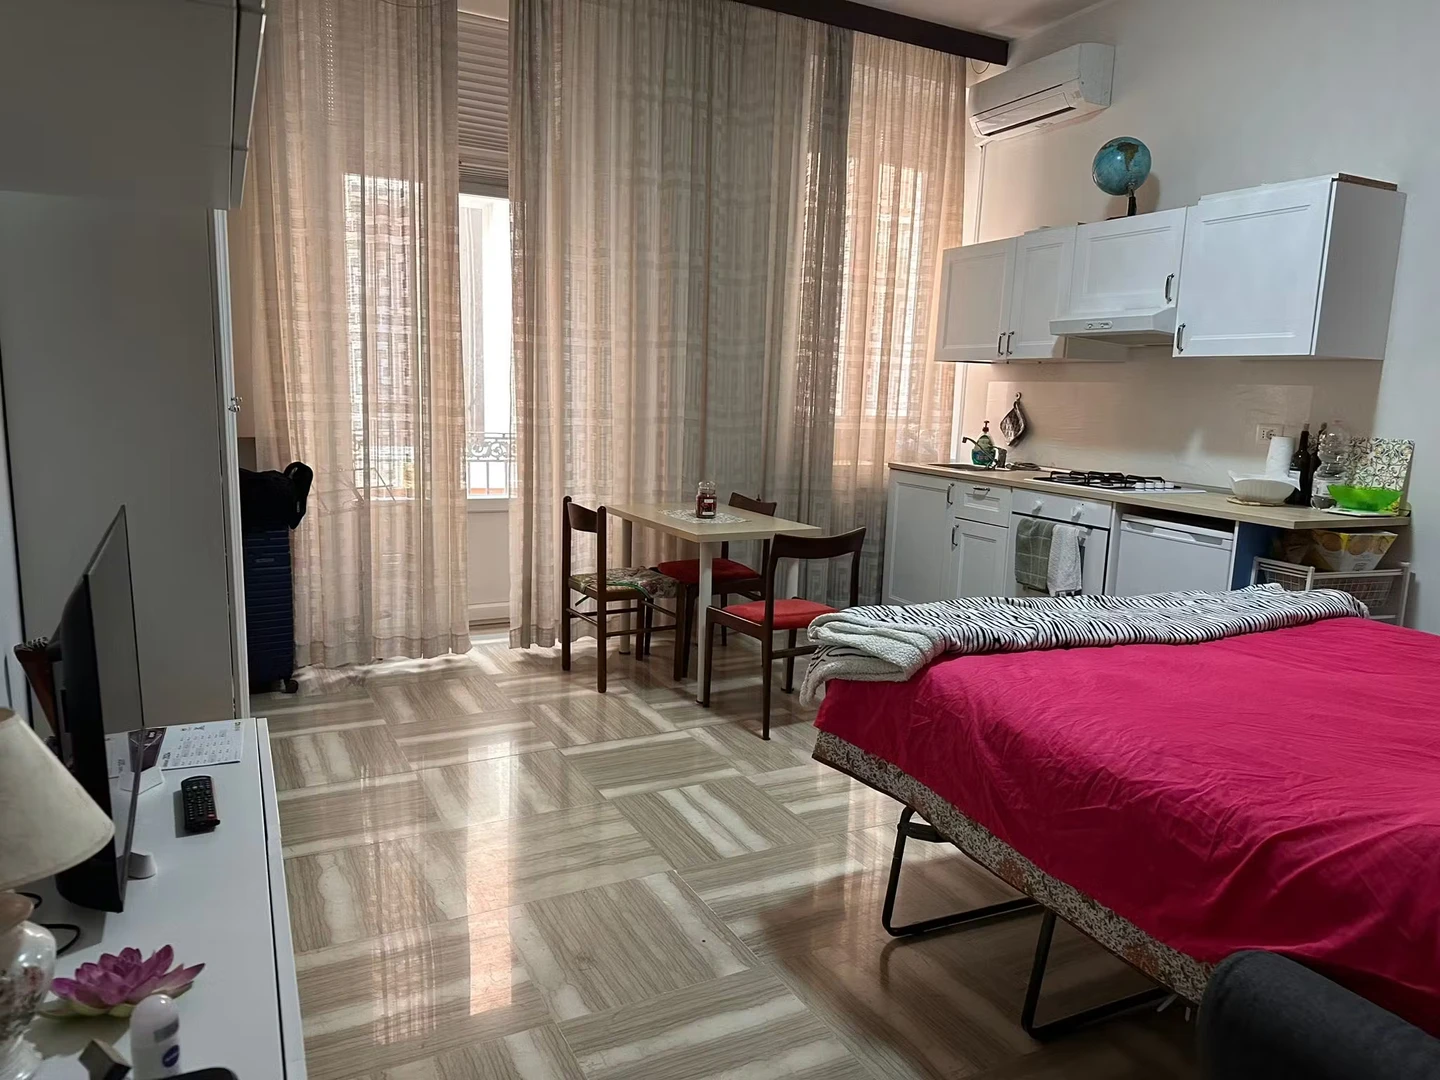 Accommodation in the centre of Teramo